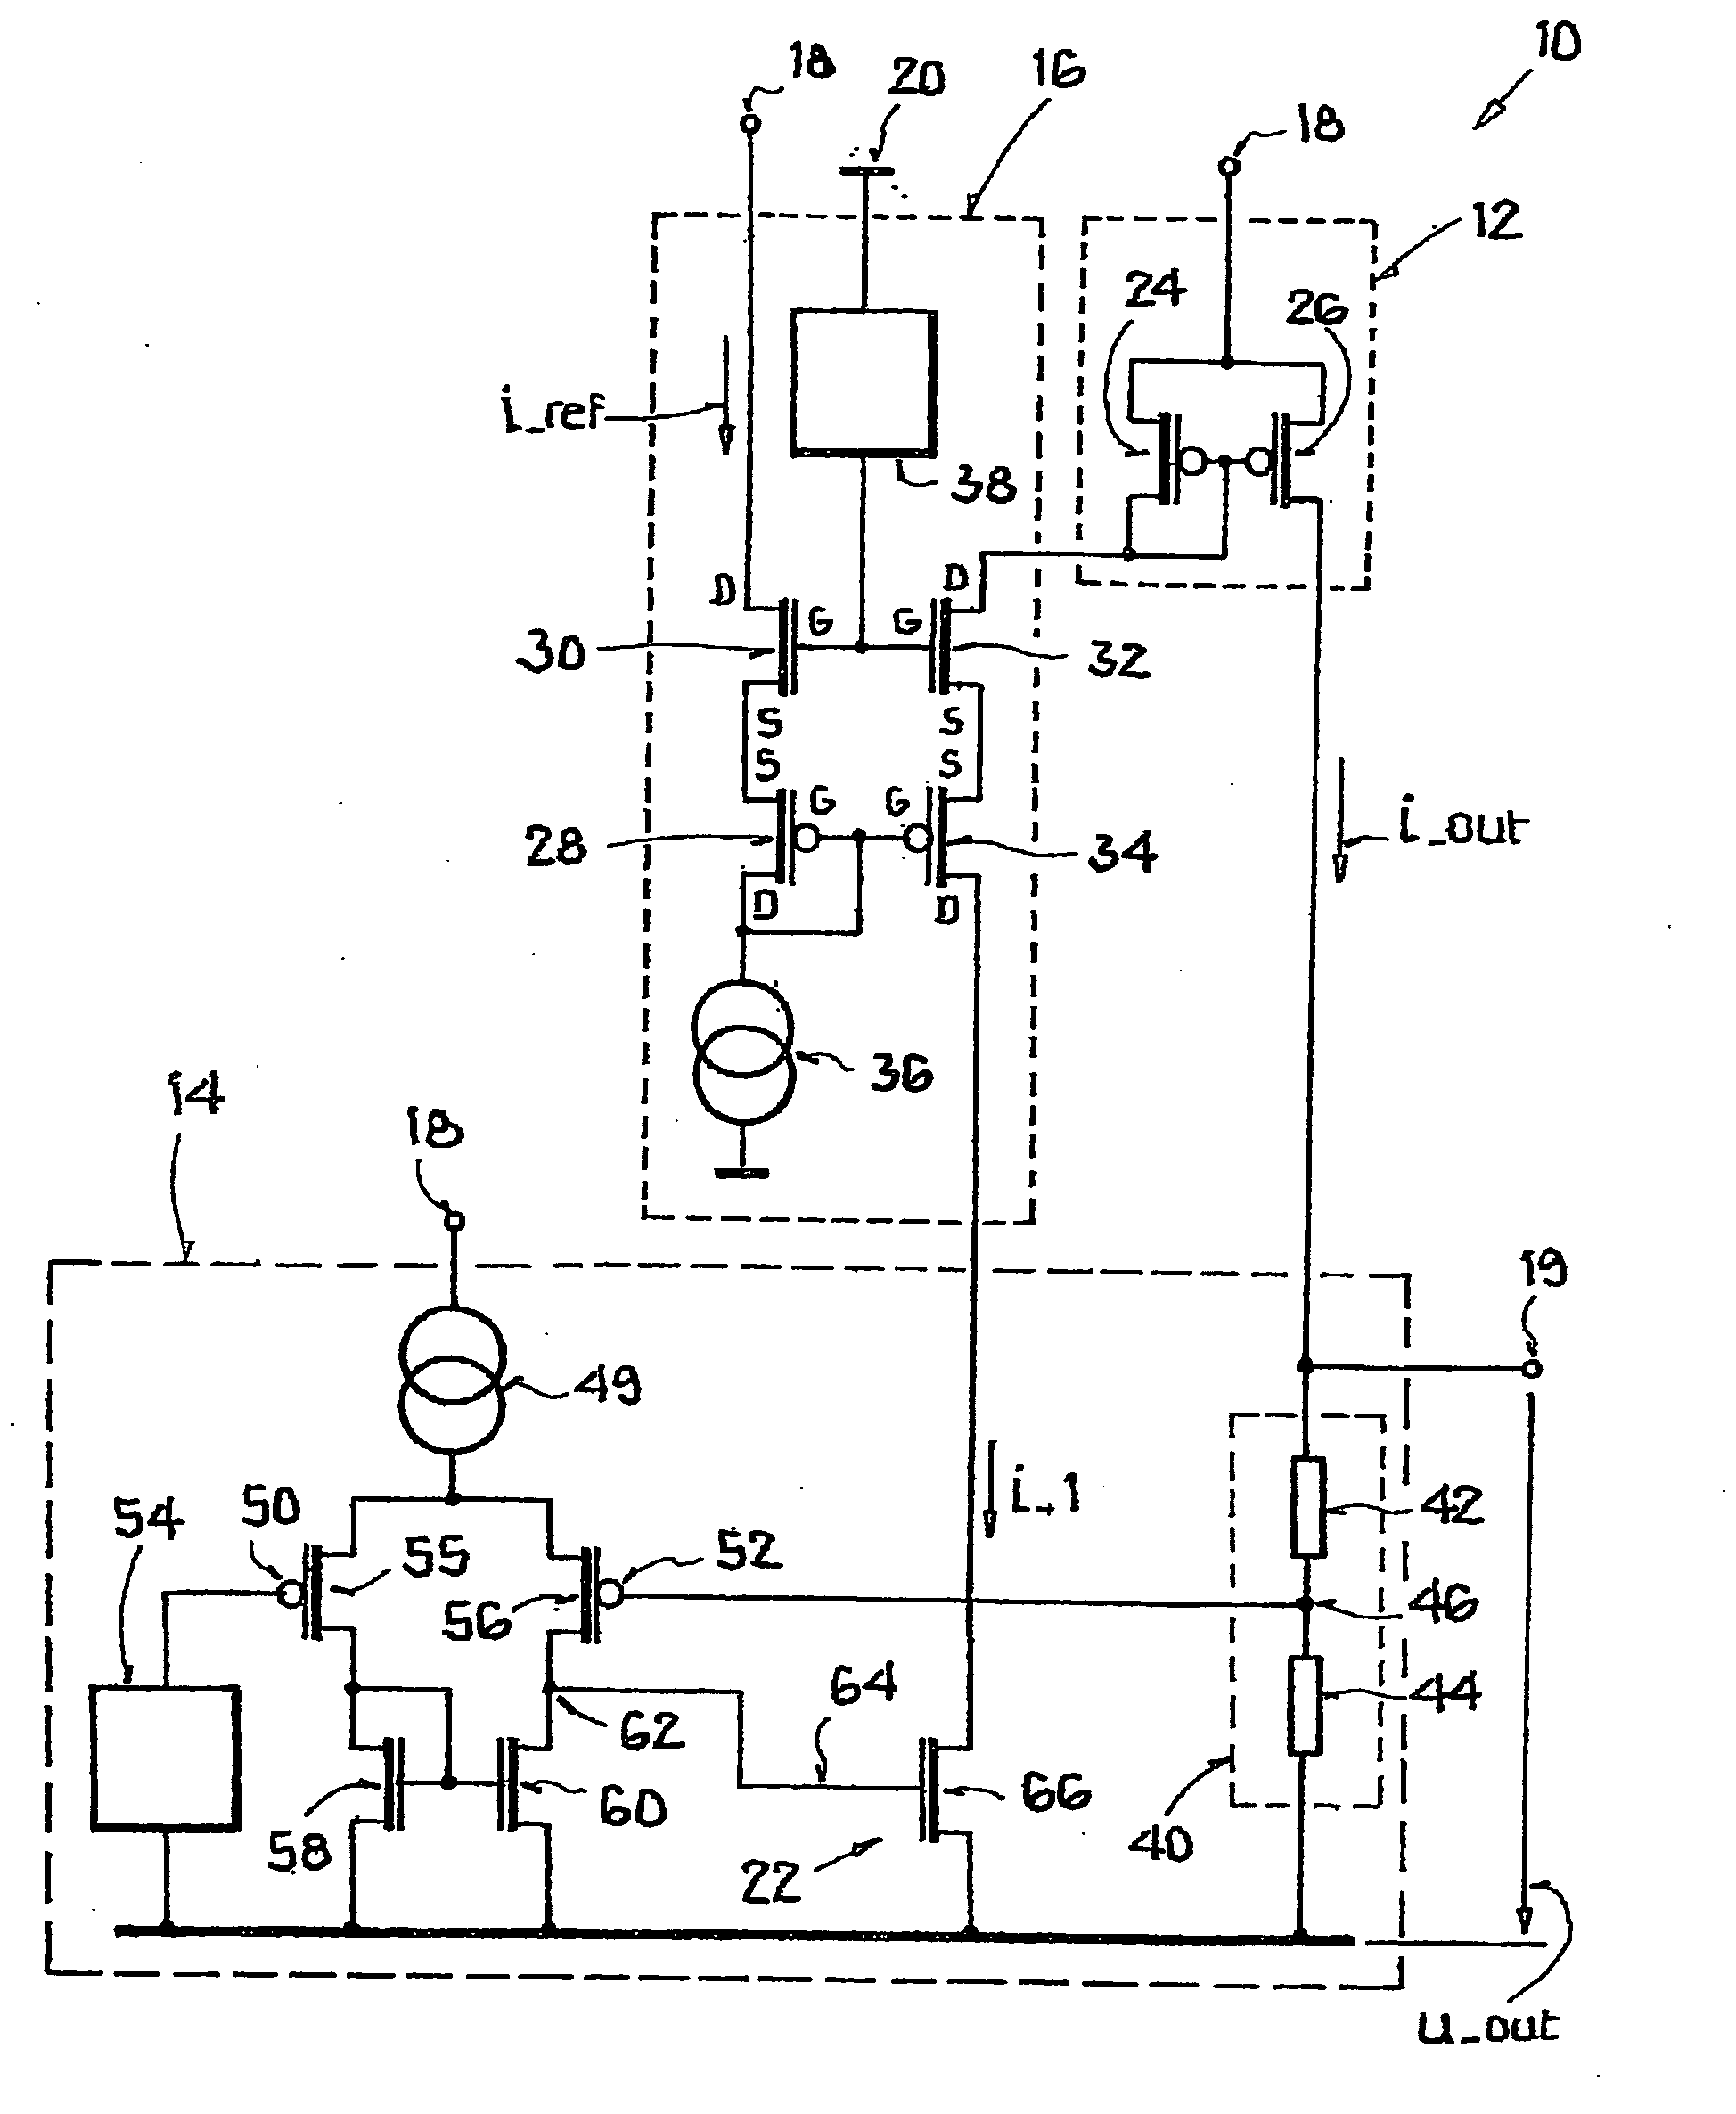 Constant voltage source with output current limitation